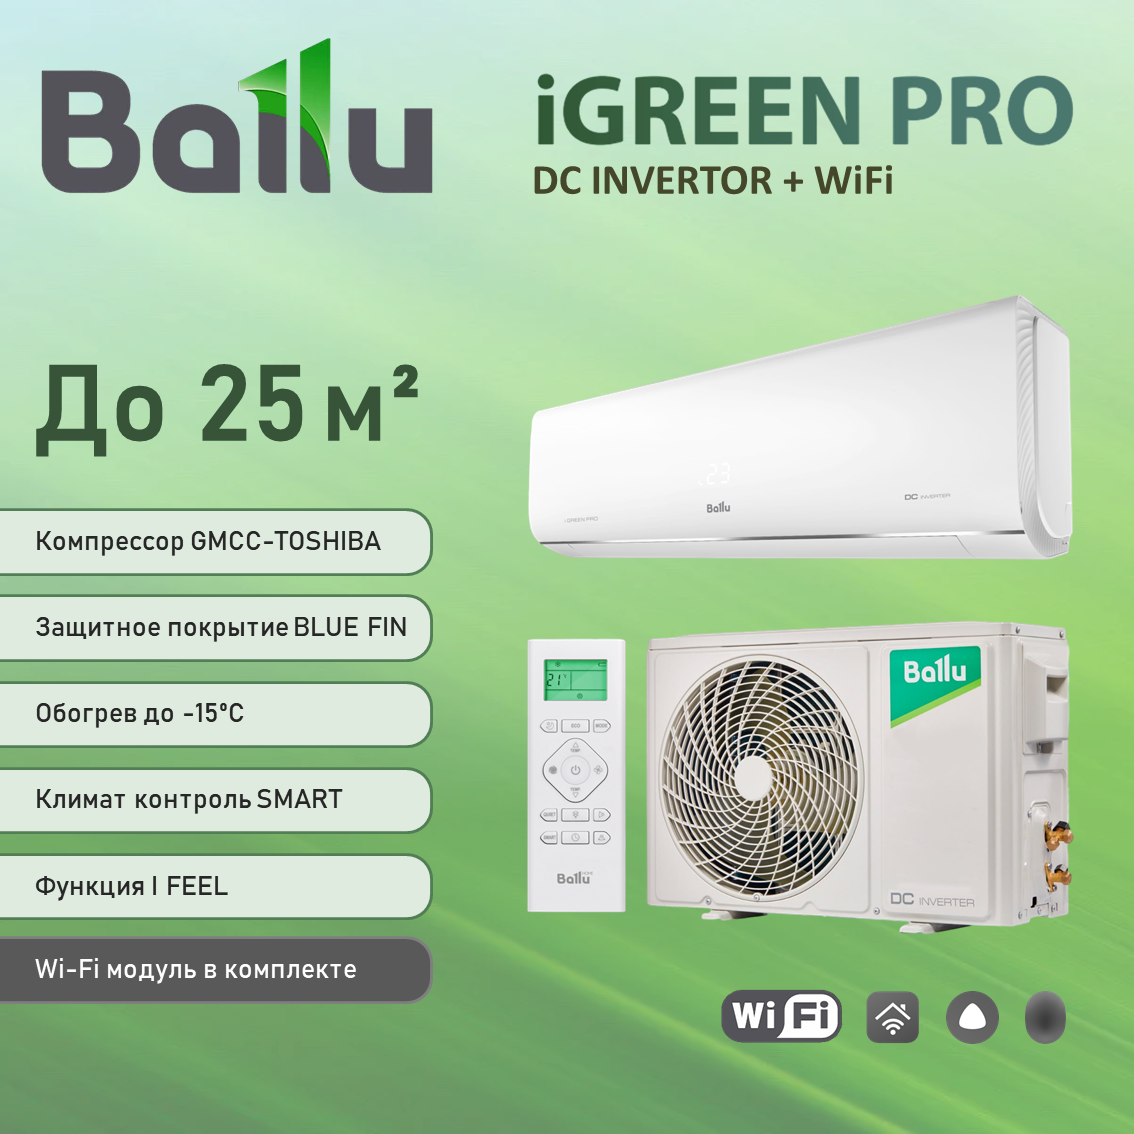 Кондиционер Ballu BSAGI-09HN8 iGreen Pro DC Inverter с Wi-Fi ( опция ) - фотография № 1